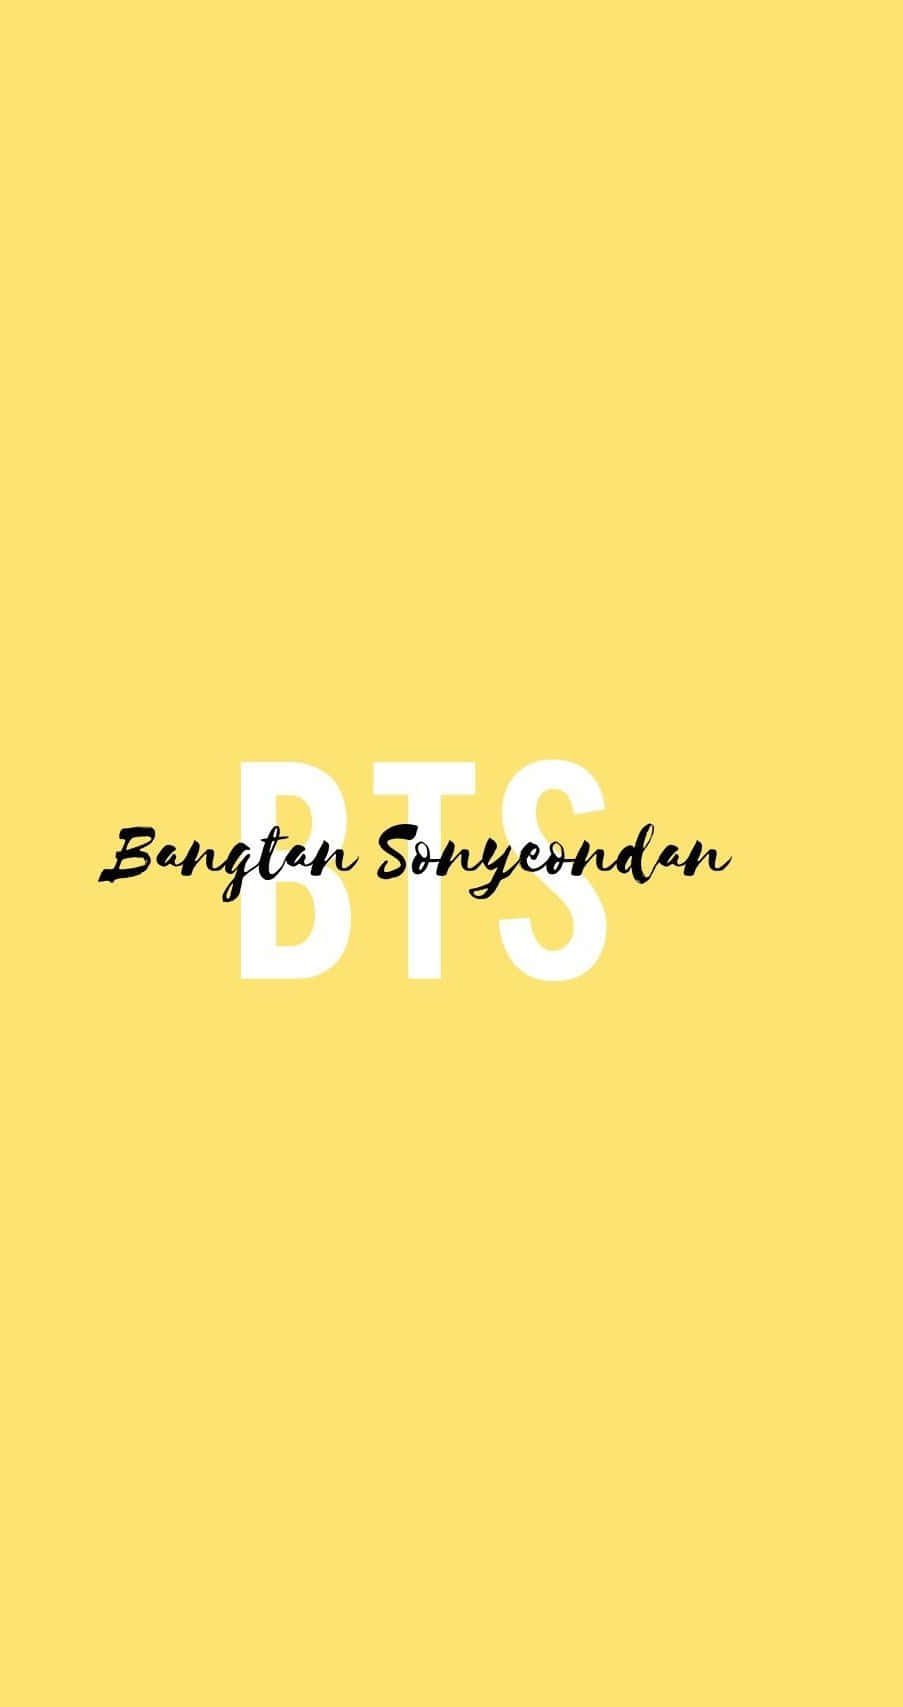 Bangtan Sonyeondan - BTS - Incredible Group Photo Wallpaper